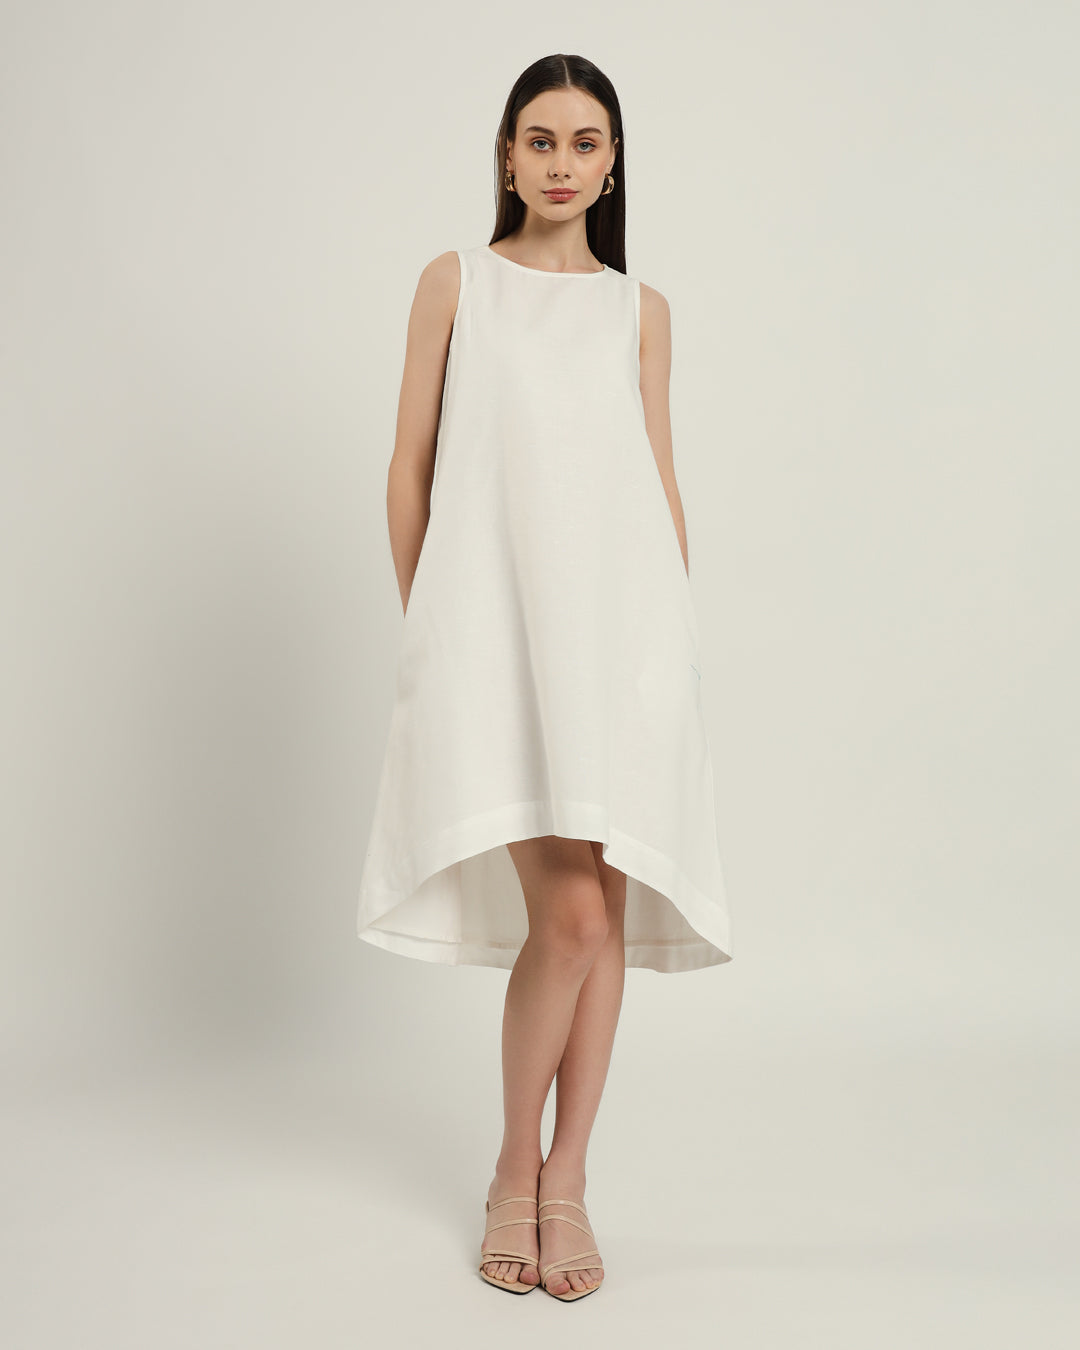 The Odesa Daisy White Linen Dress